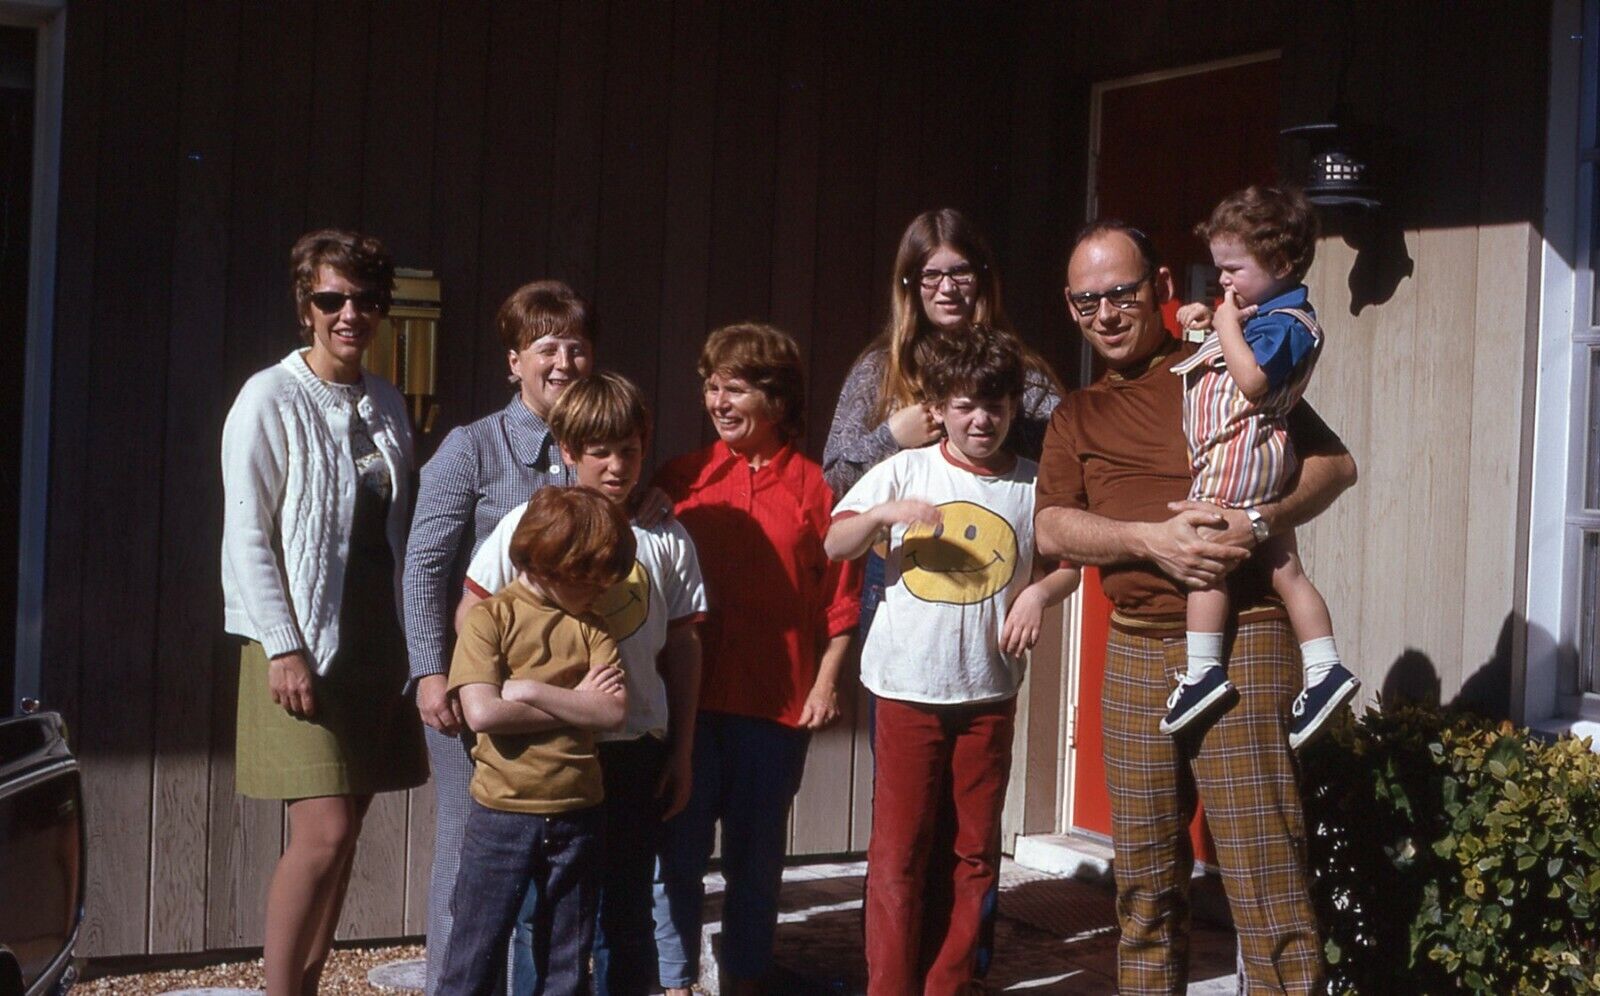 1972 Groovy Family Portrait 70s Vintage 35mm Kodachrome Slide